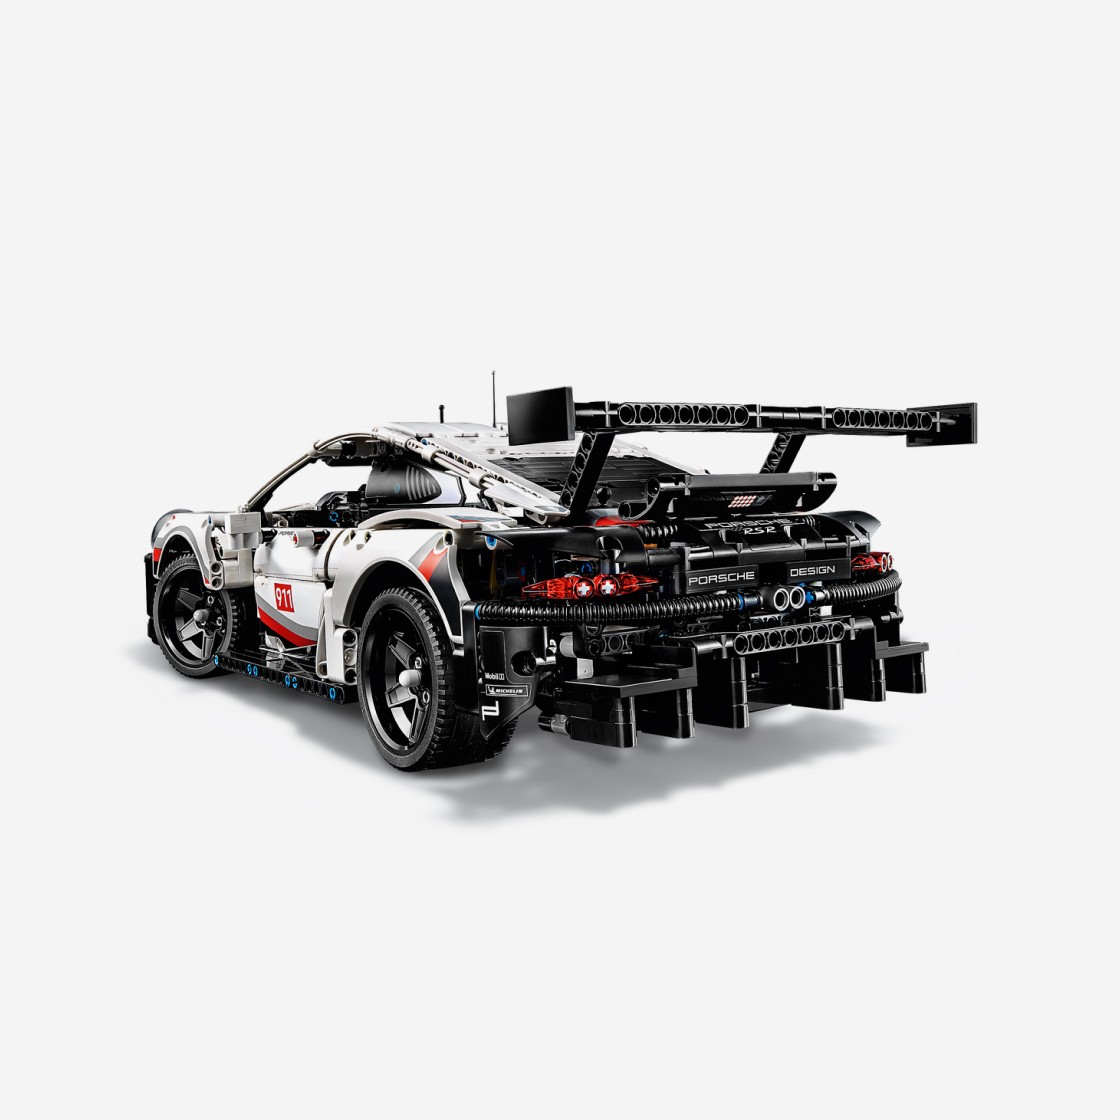 Lego] 레고 포르쉐 911 Rsr 발매 정보 - 42096 - 럭드 (Luck-D)